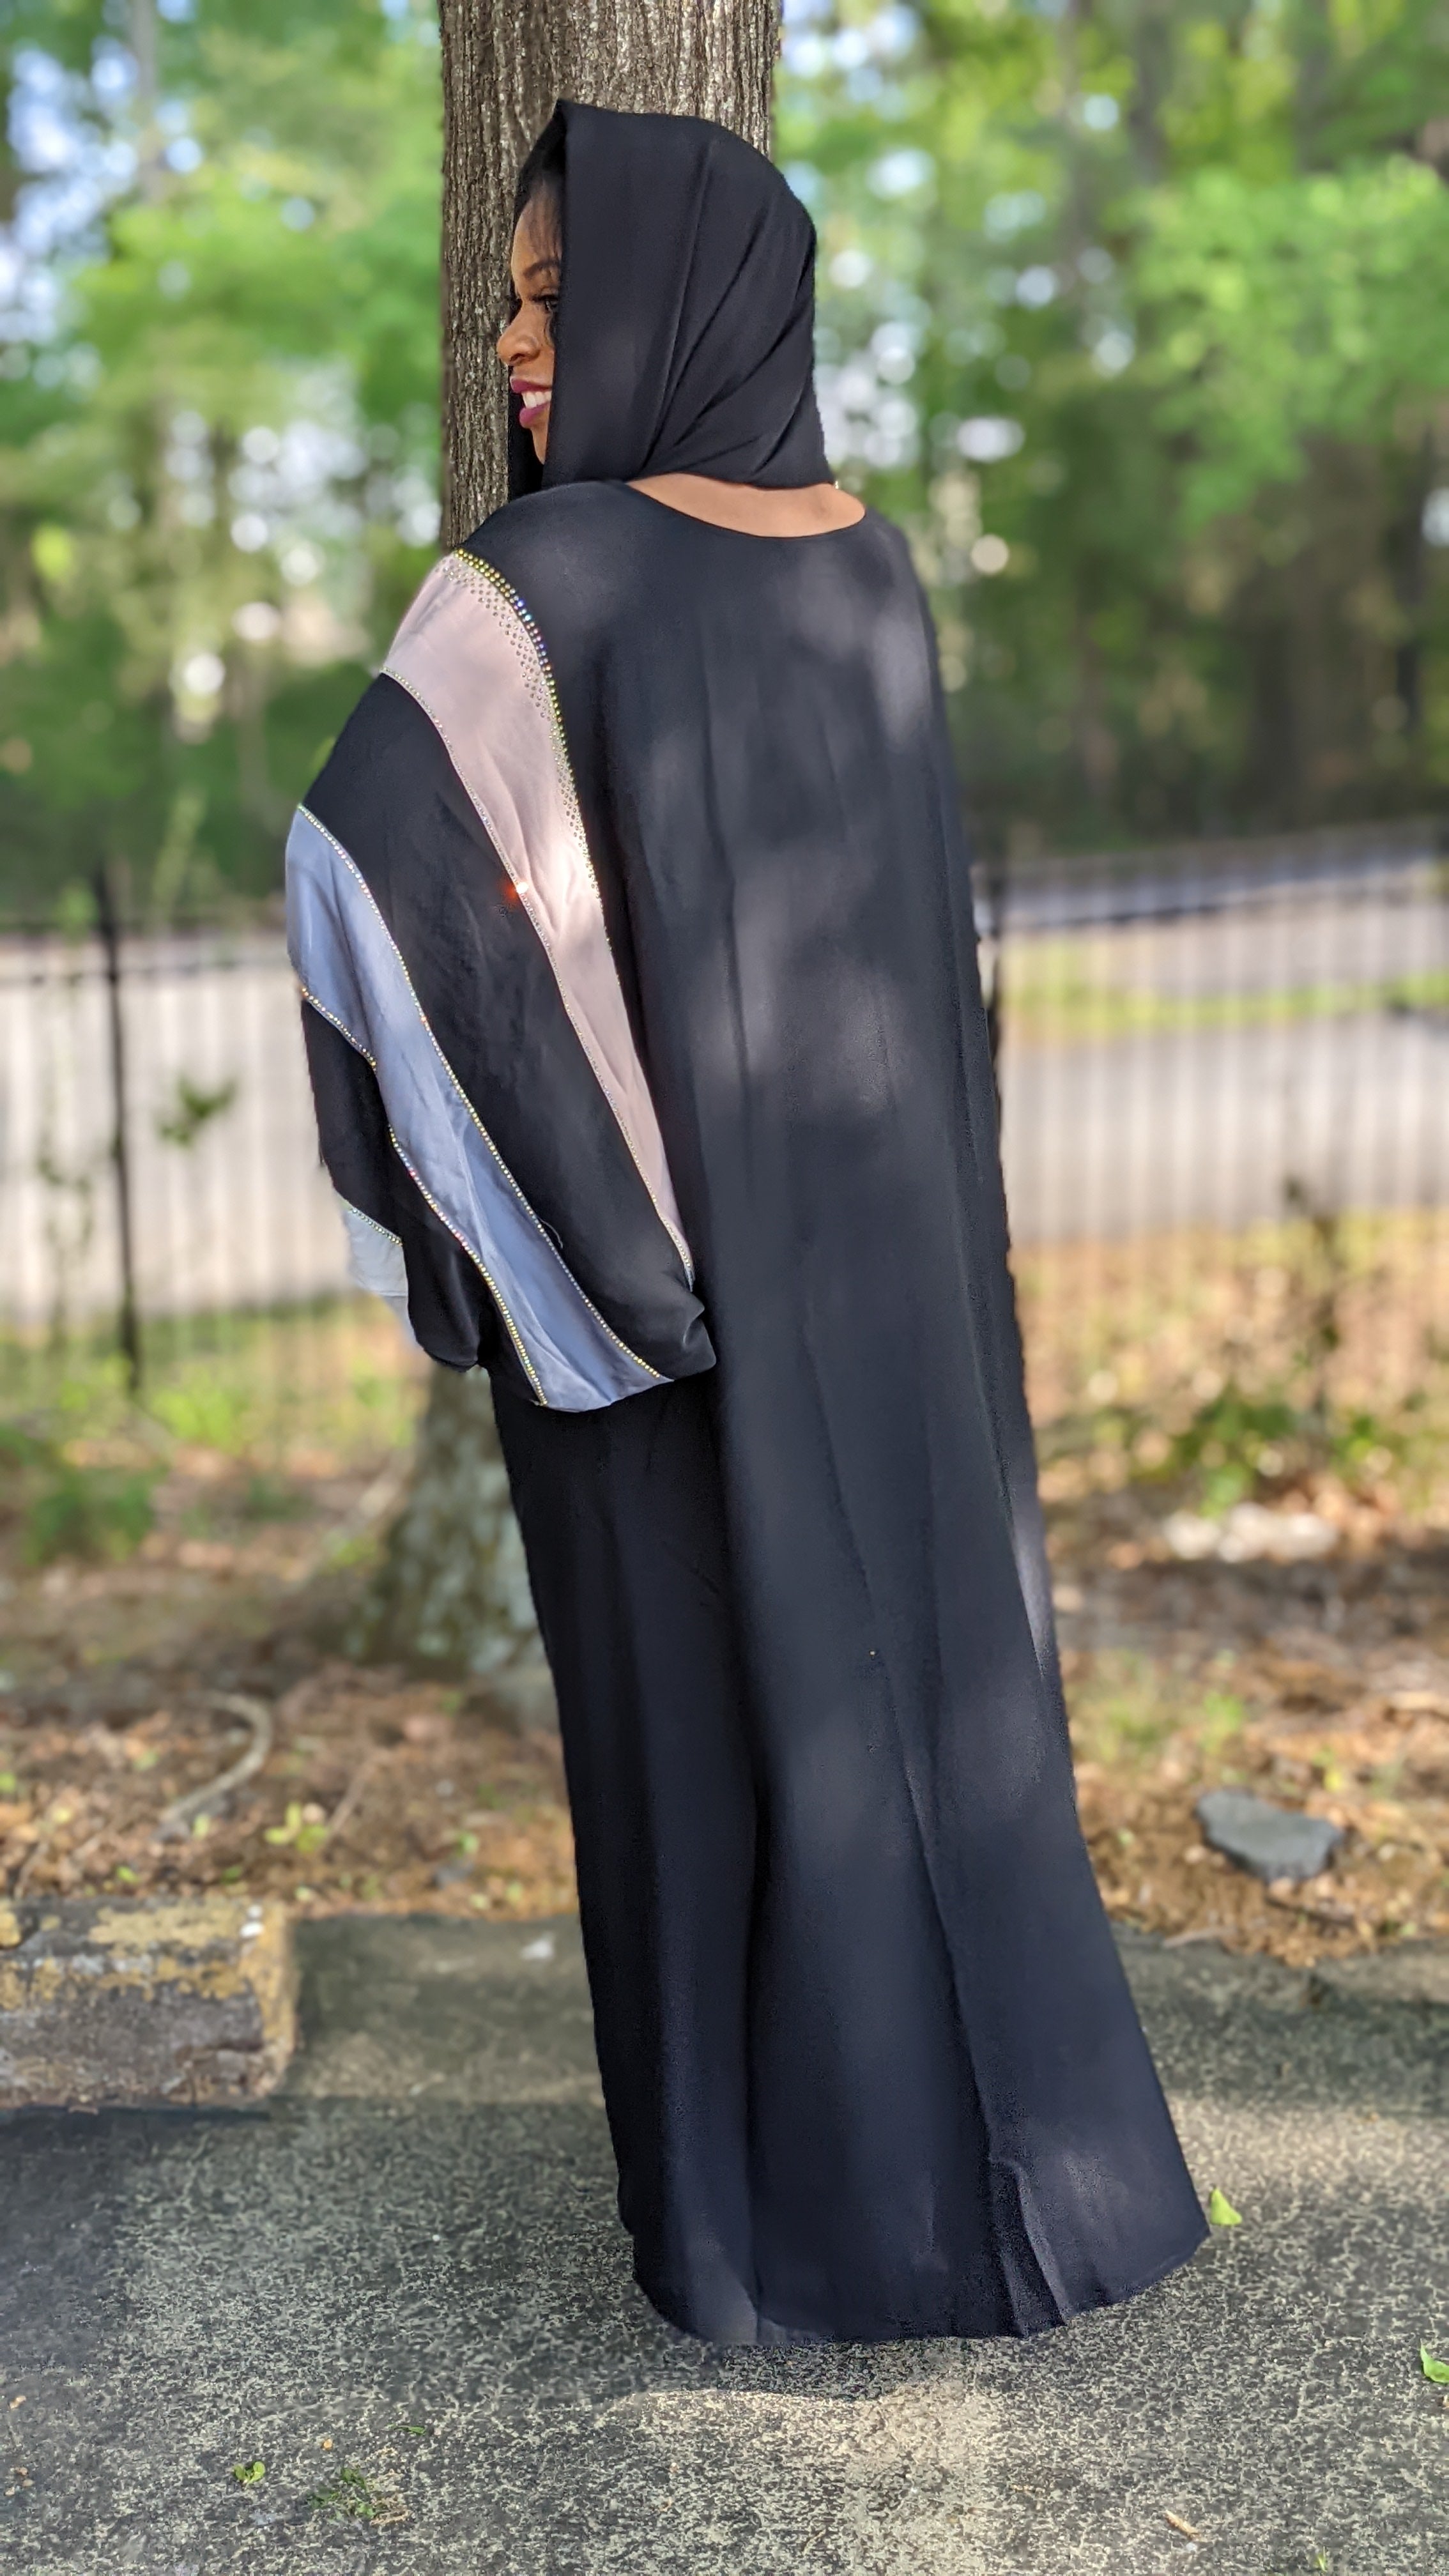 Black African Chiffon Women Arabic Kaftan Moroccan Dress with matching Hijab-DPKBPG06